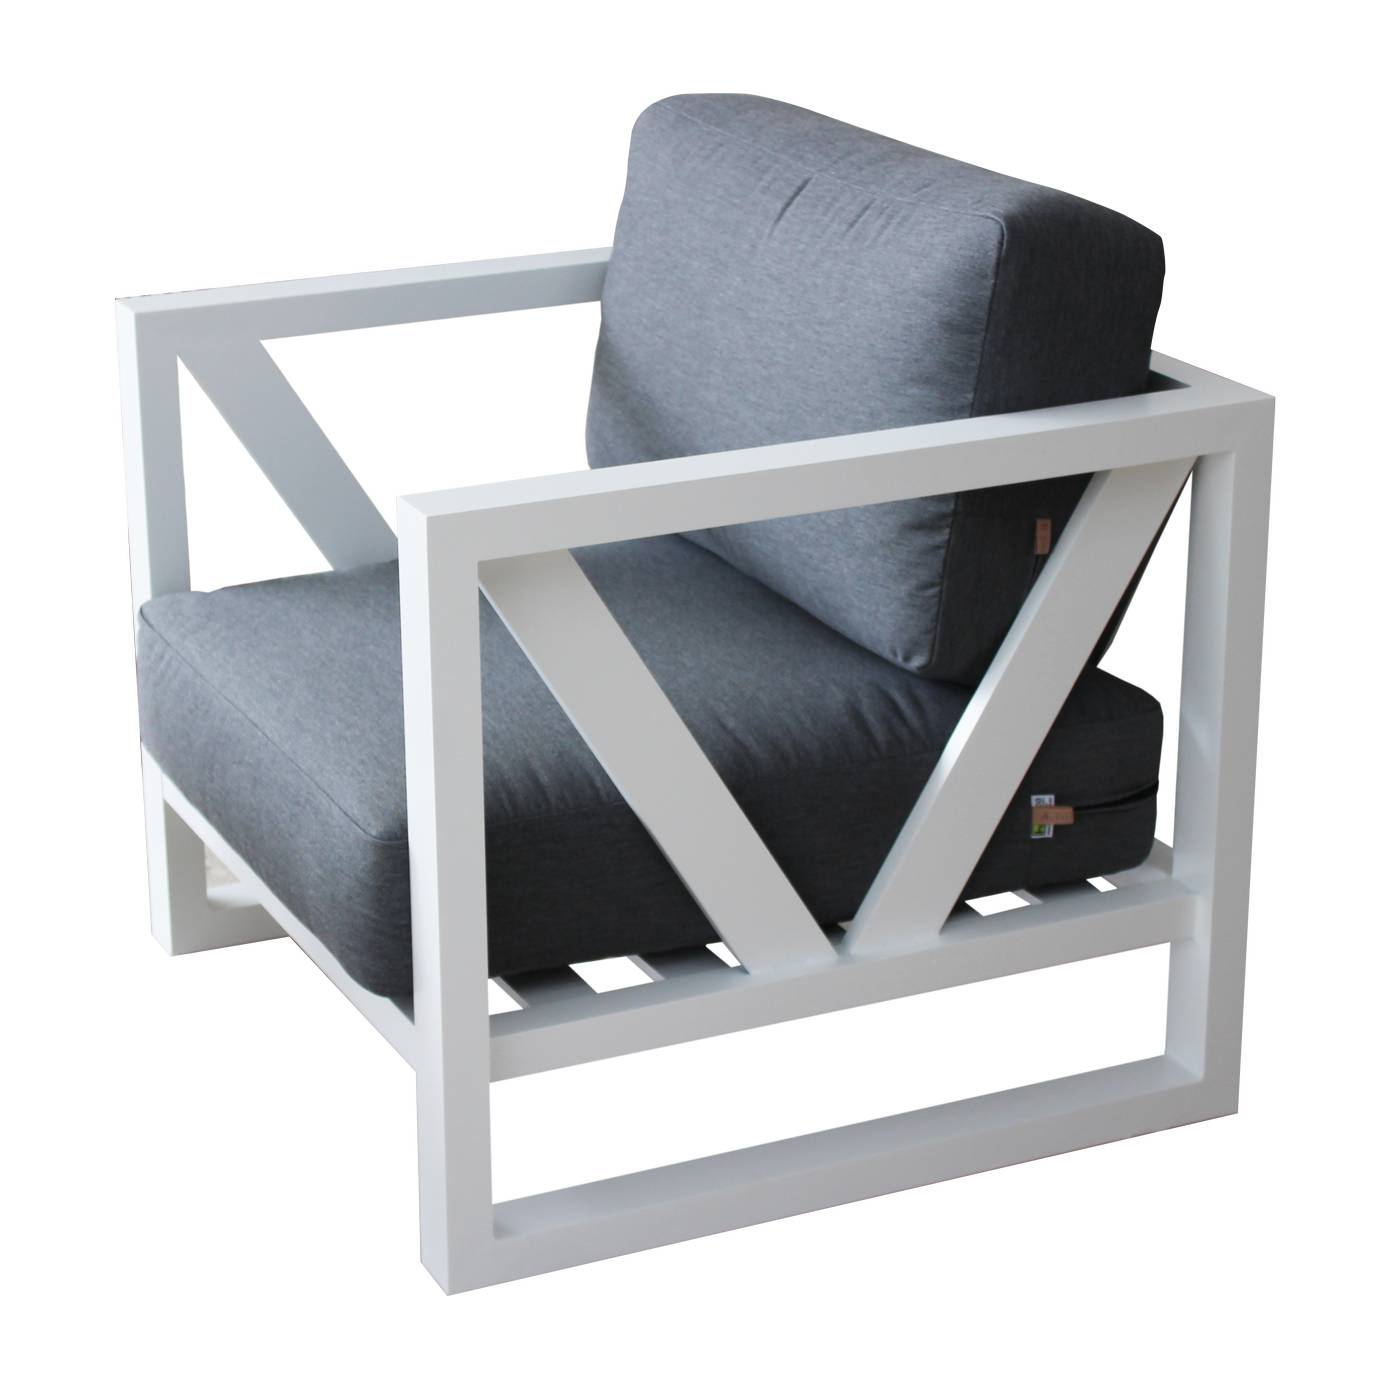 Lujoso sillón relax con cojines desenfundables. Robusta estructura aluminio de color blanco, antracita, champagne, plata o marrón.